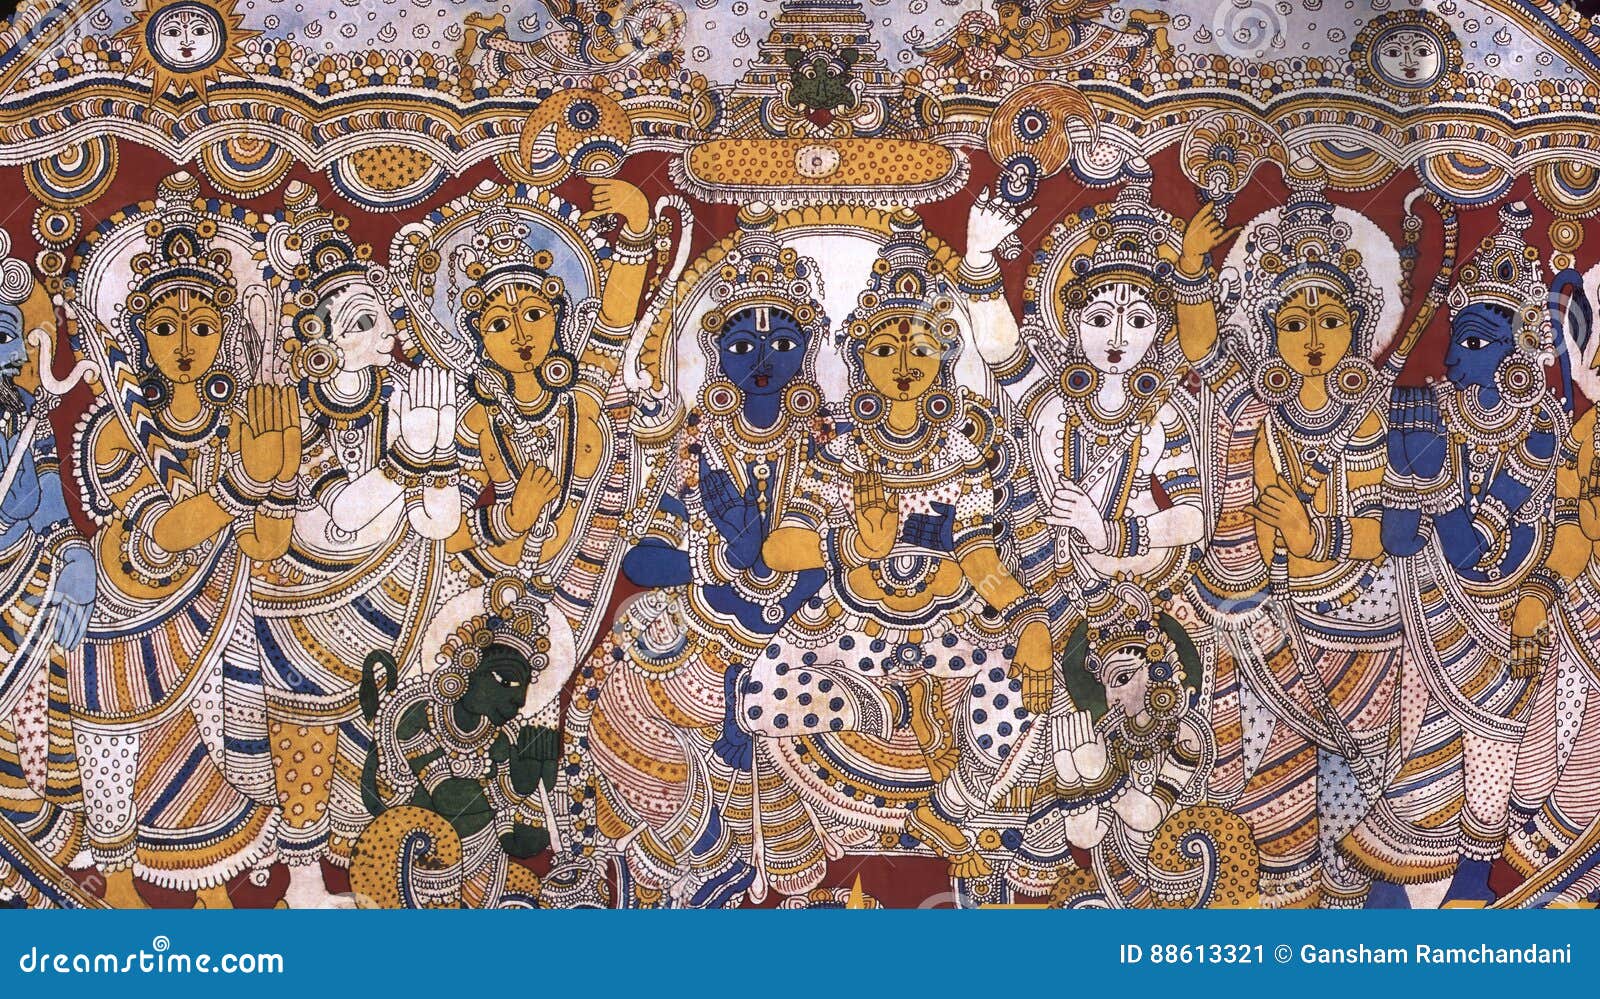 kalamkari painting of lord rama-sita